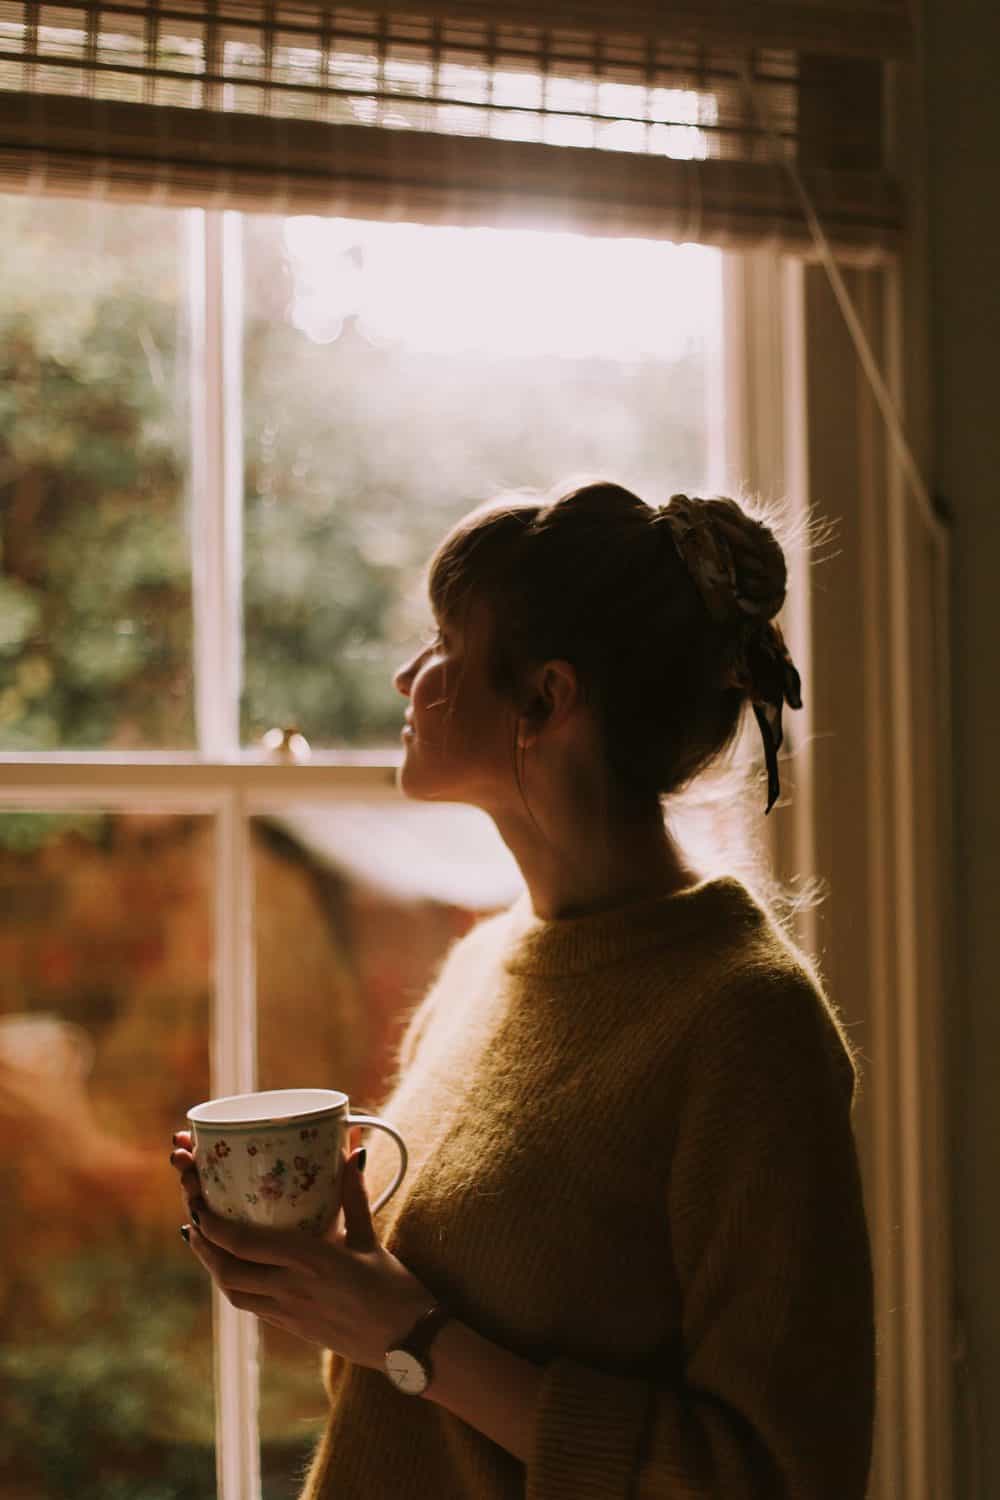 Enjoying coffee at home